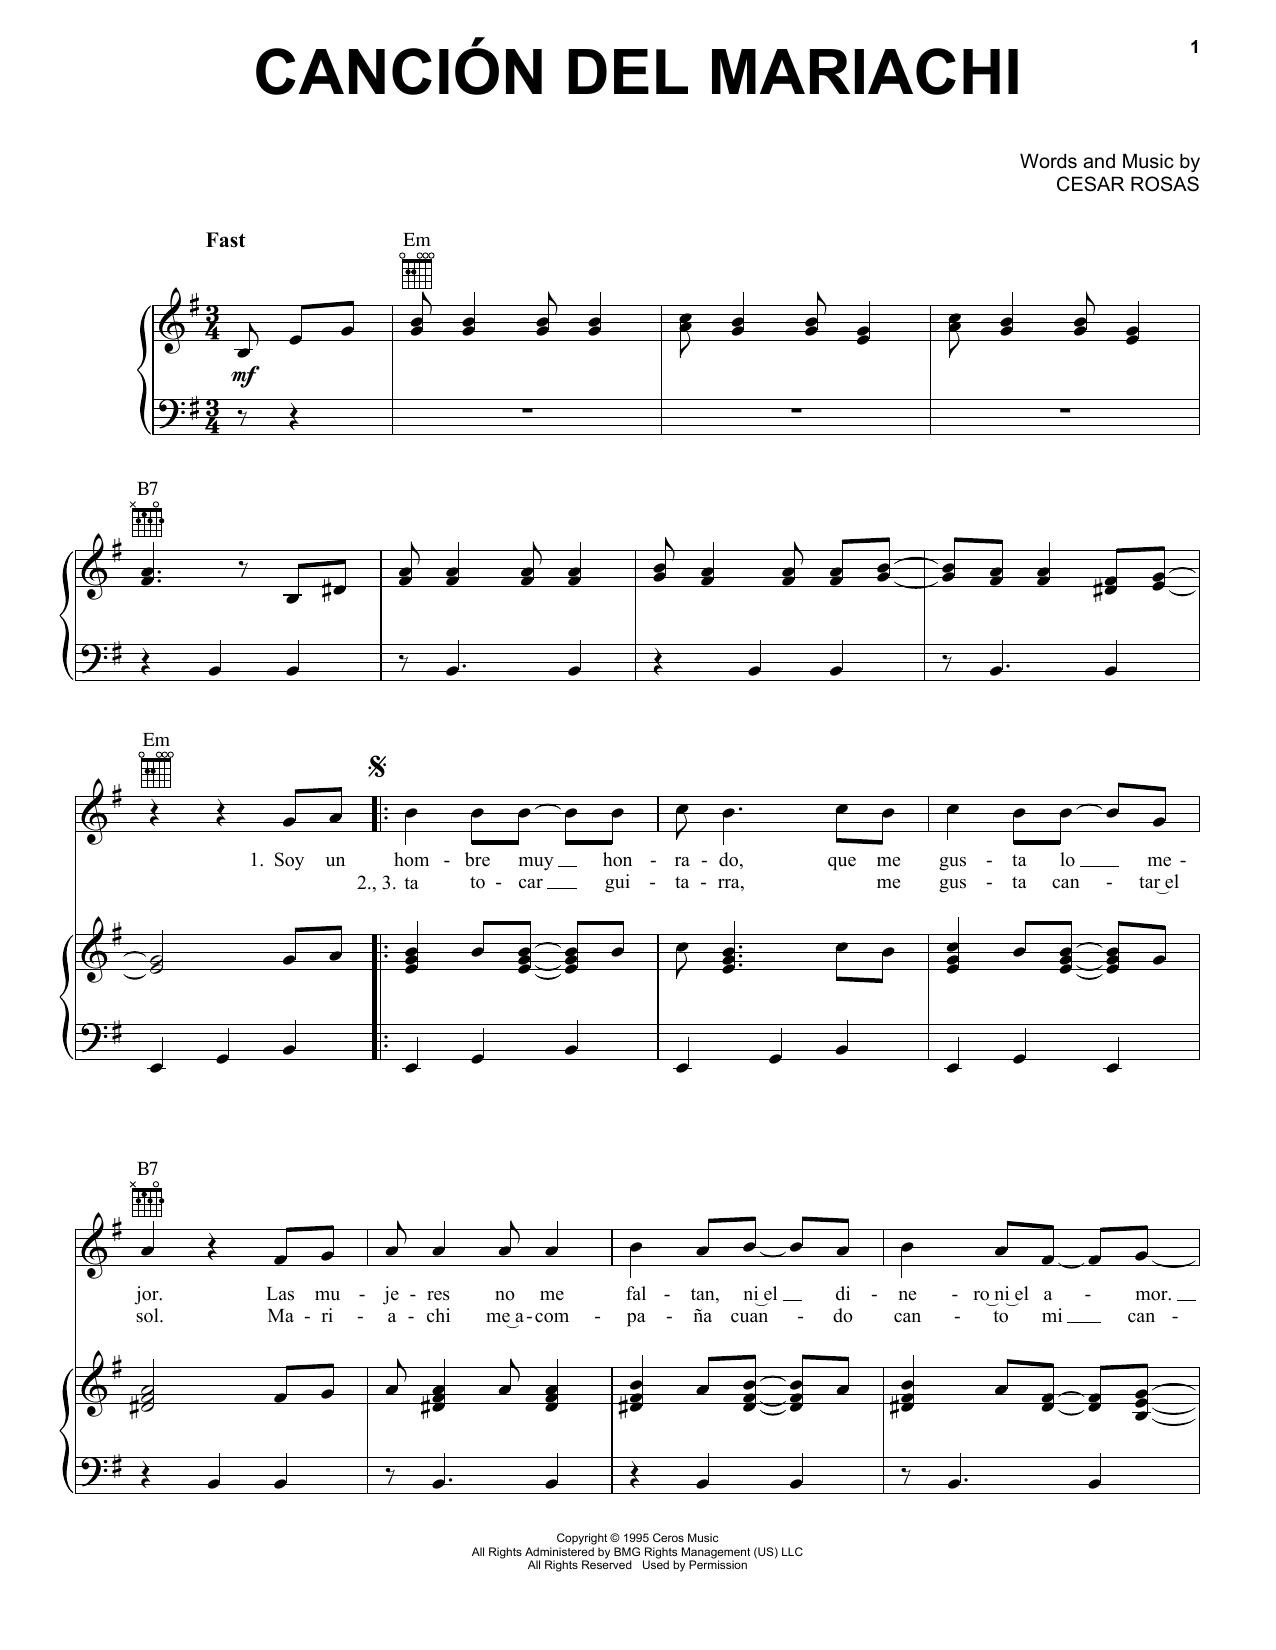 Los Lobos & Antonio Banderas Cancion Del Mariachi Sheet Music Notes & Chords for Piano, Vocal & Guitar (Right-Hand Melody) - Download or Print PDF